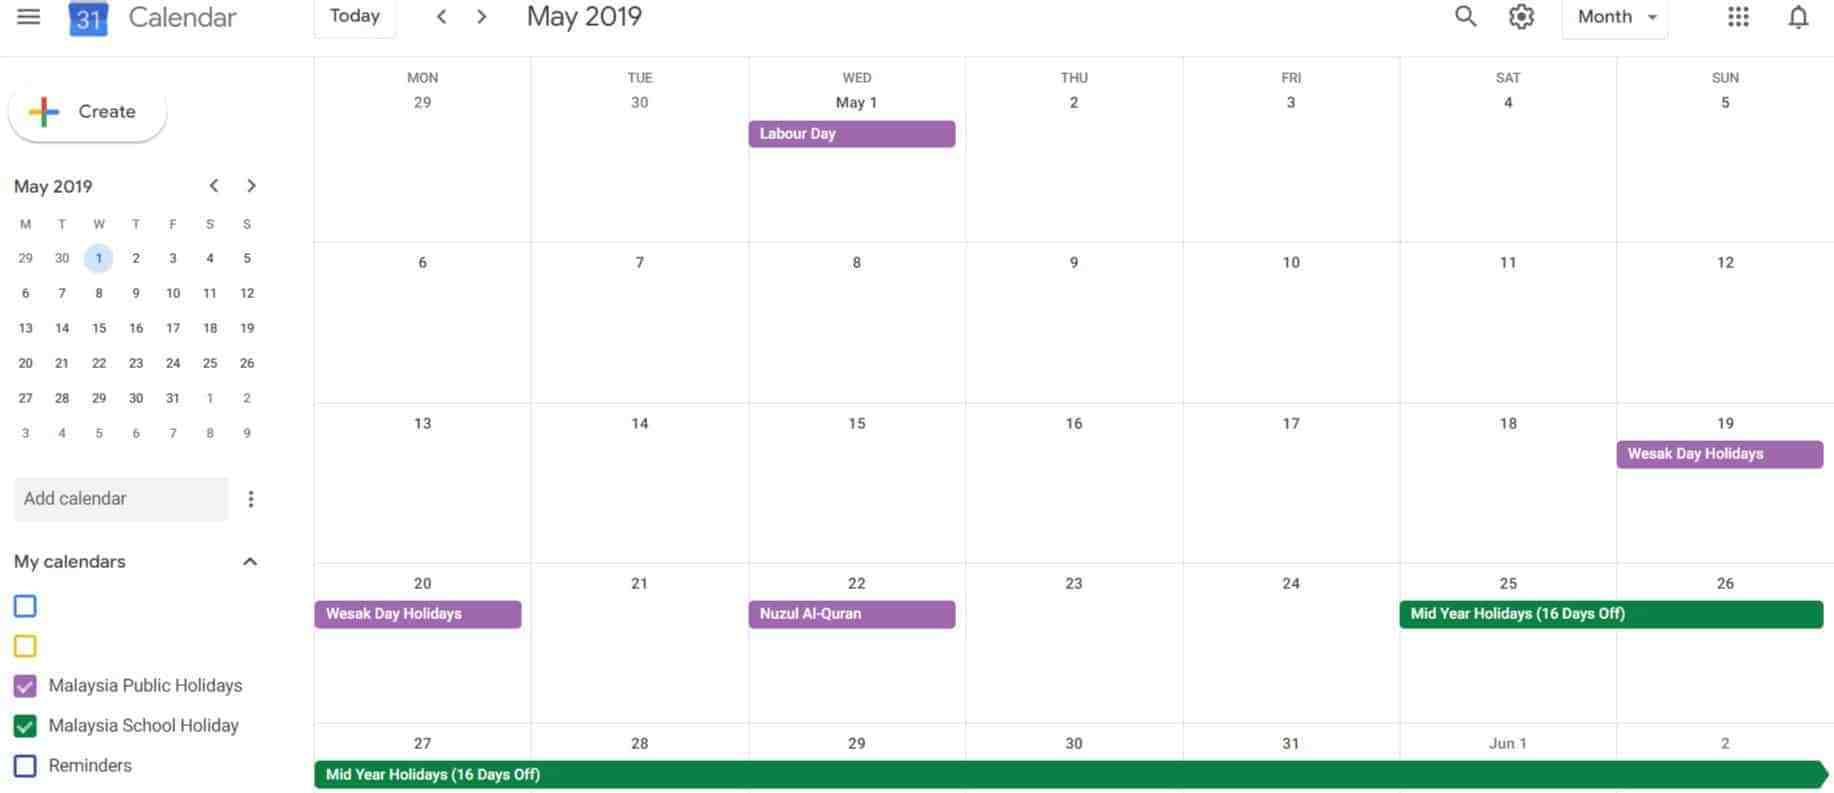 Bangla Calendar 2019 Pdf  Google Search within Uc Berkeley 2020-2020 Calendar